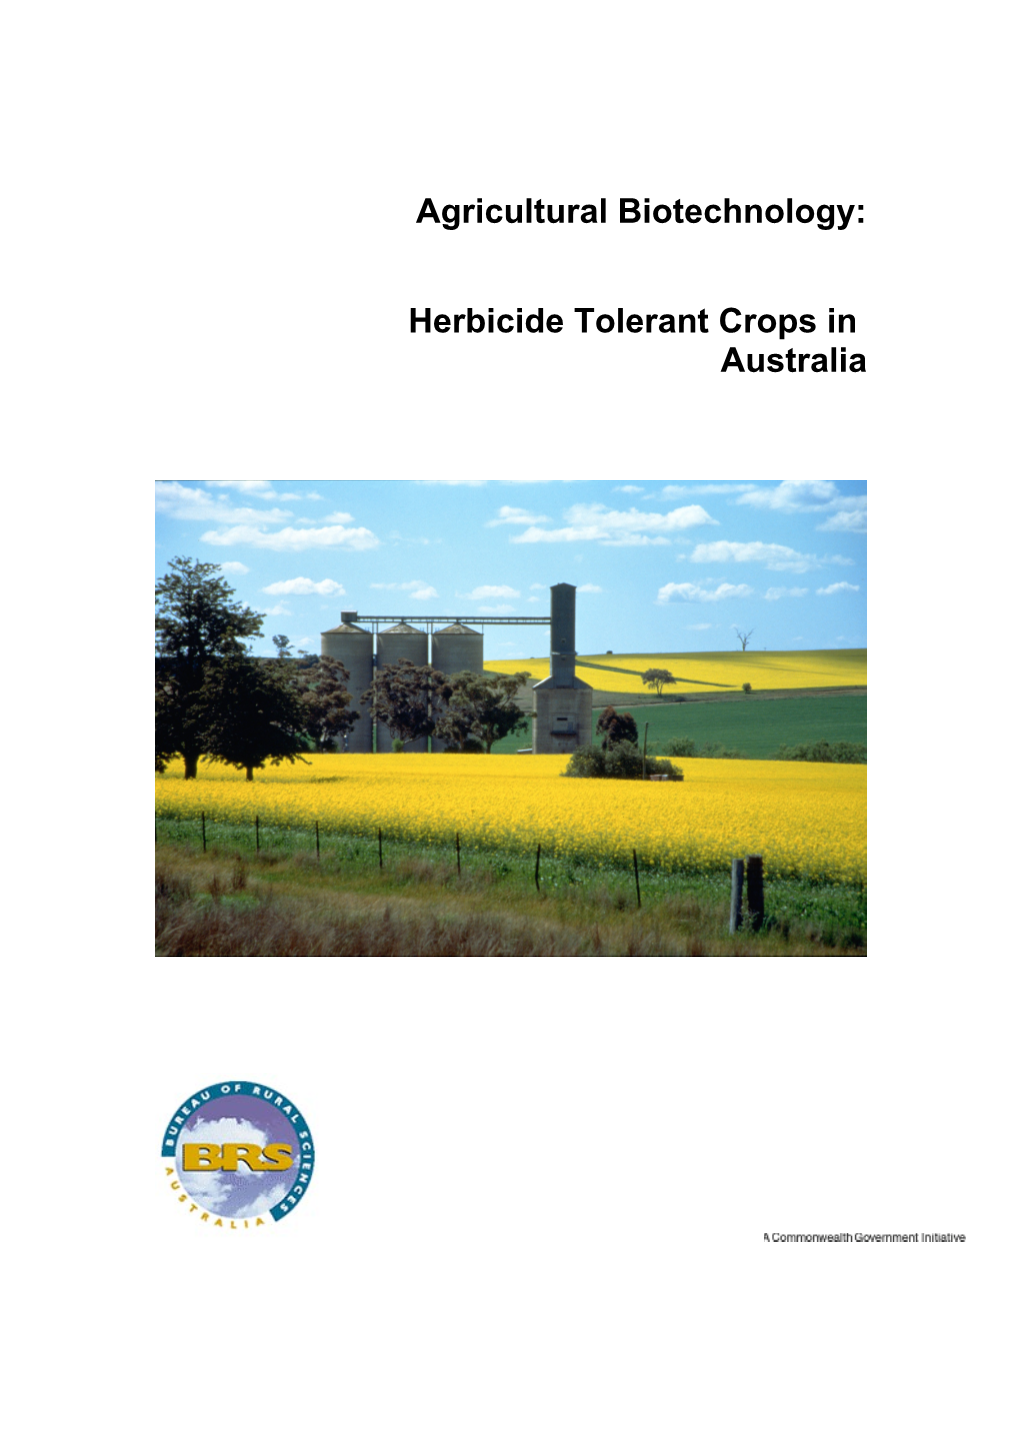 Agricultural Biotechnology: Herbicide Tolerant Crops